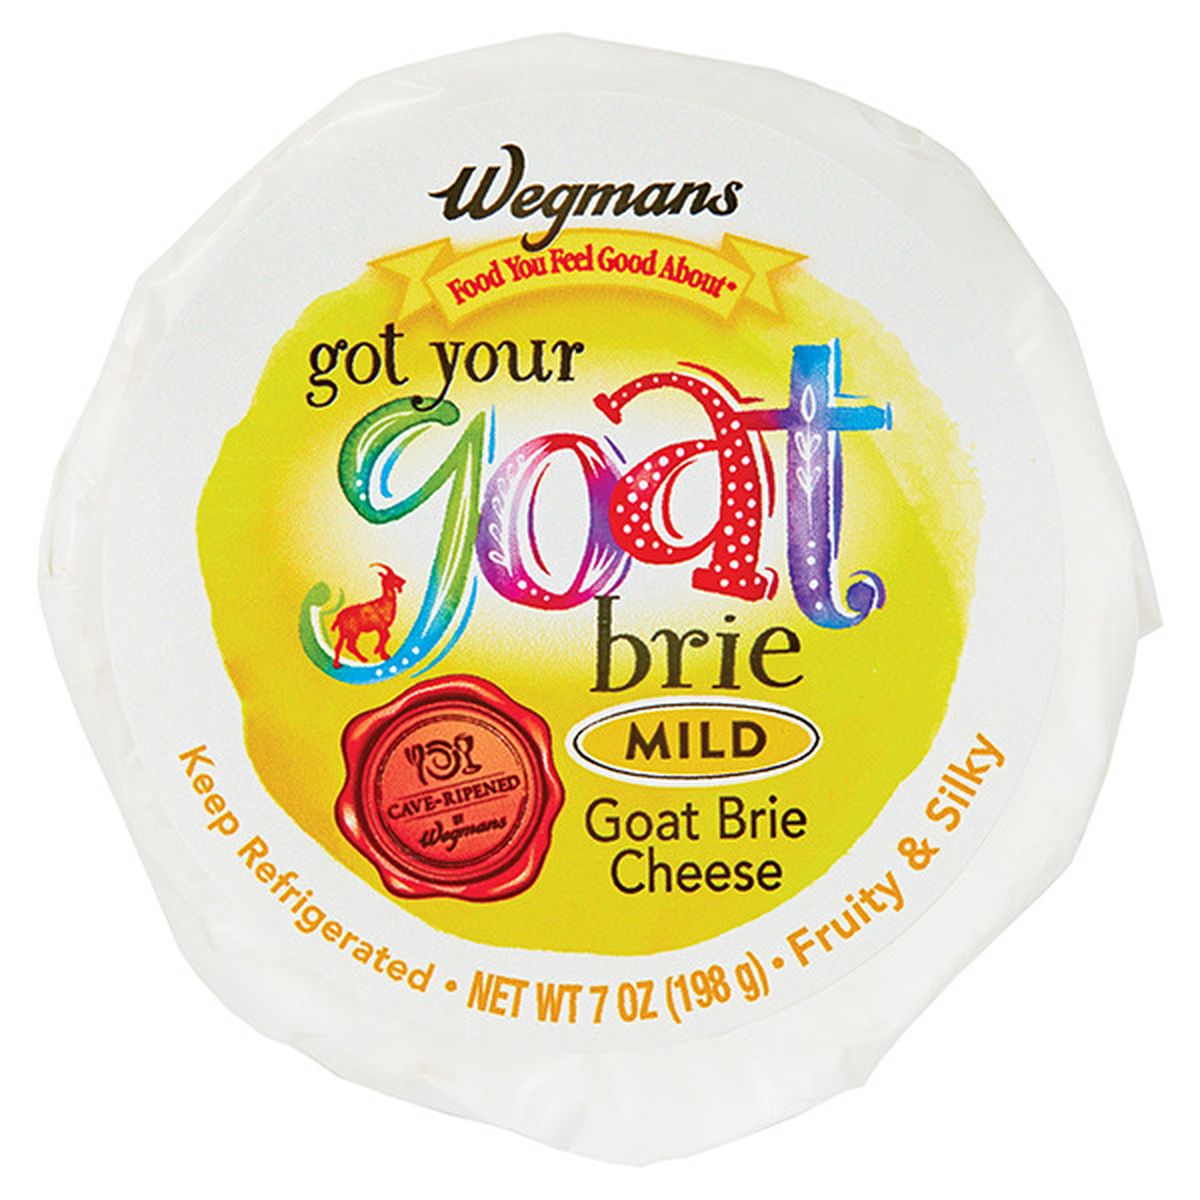 Calories in Wegmans Got Your Goat Mild Goat Brie Cheese